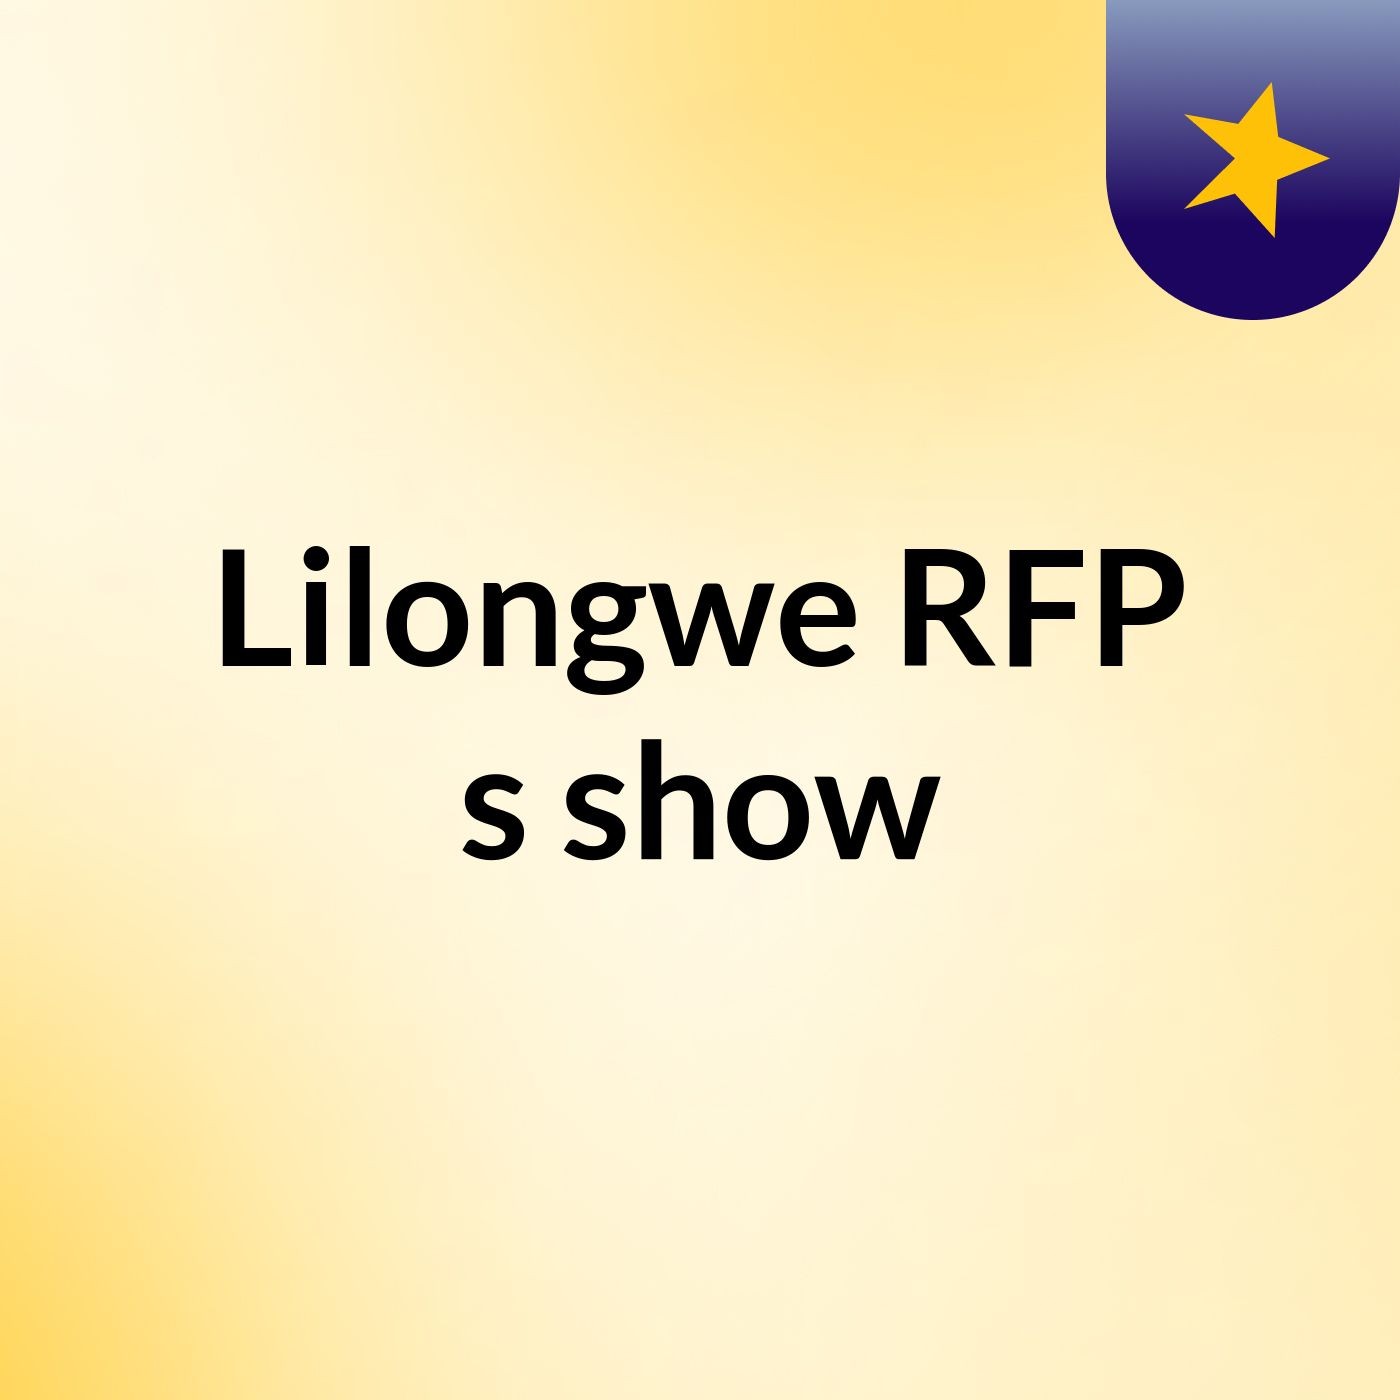 Lilongwe RFP's show